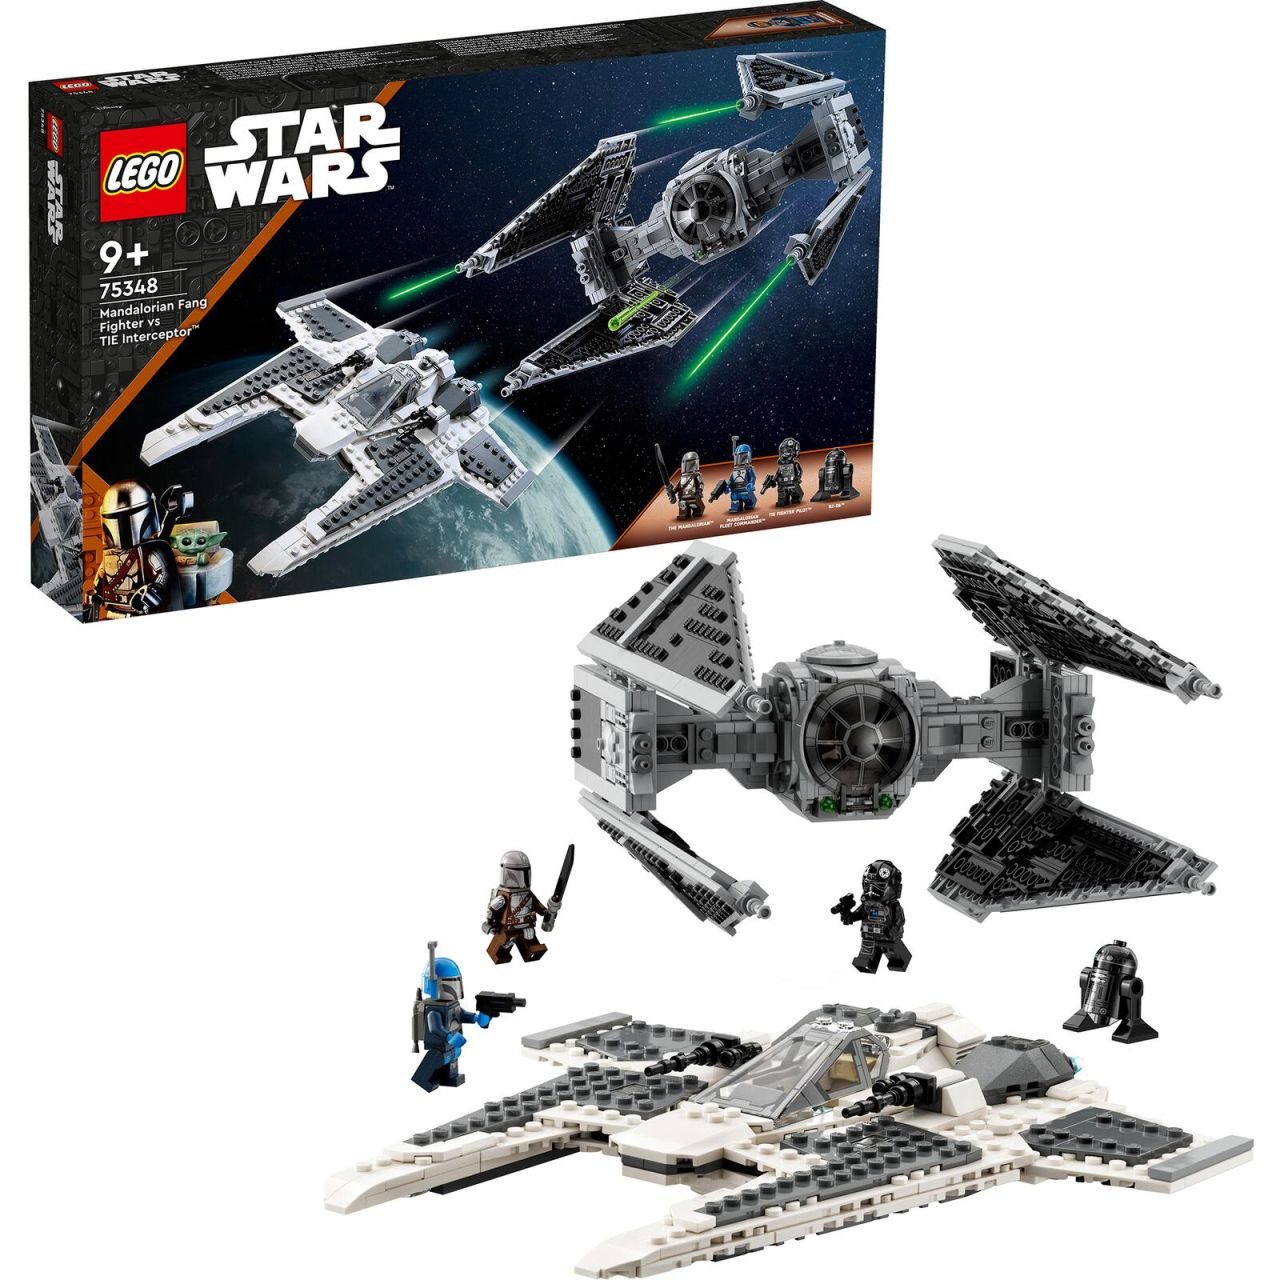 LEGO® Star Wars Mandalorischer Fang Fighter vs. TIE Interceptor™ 75348